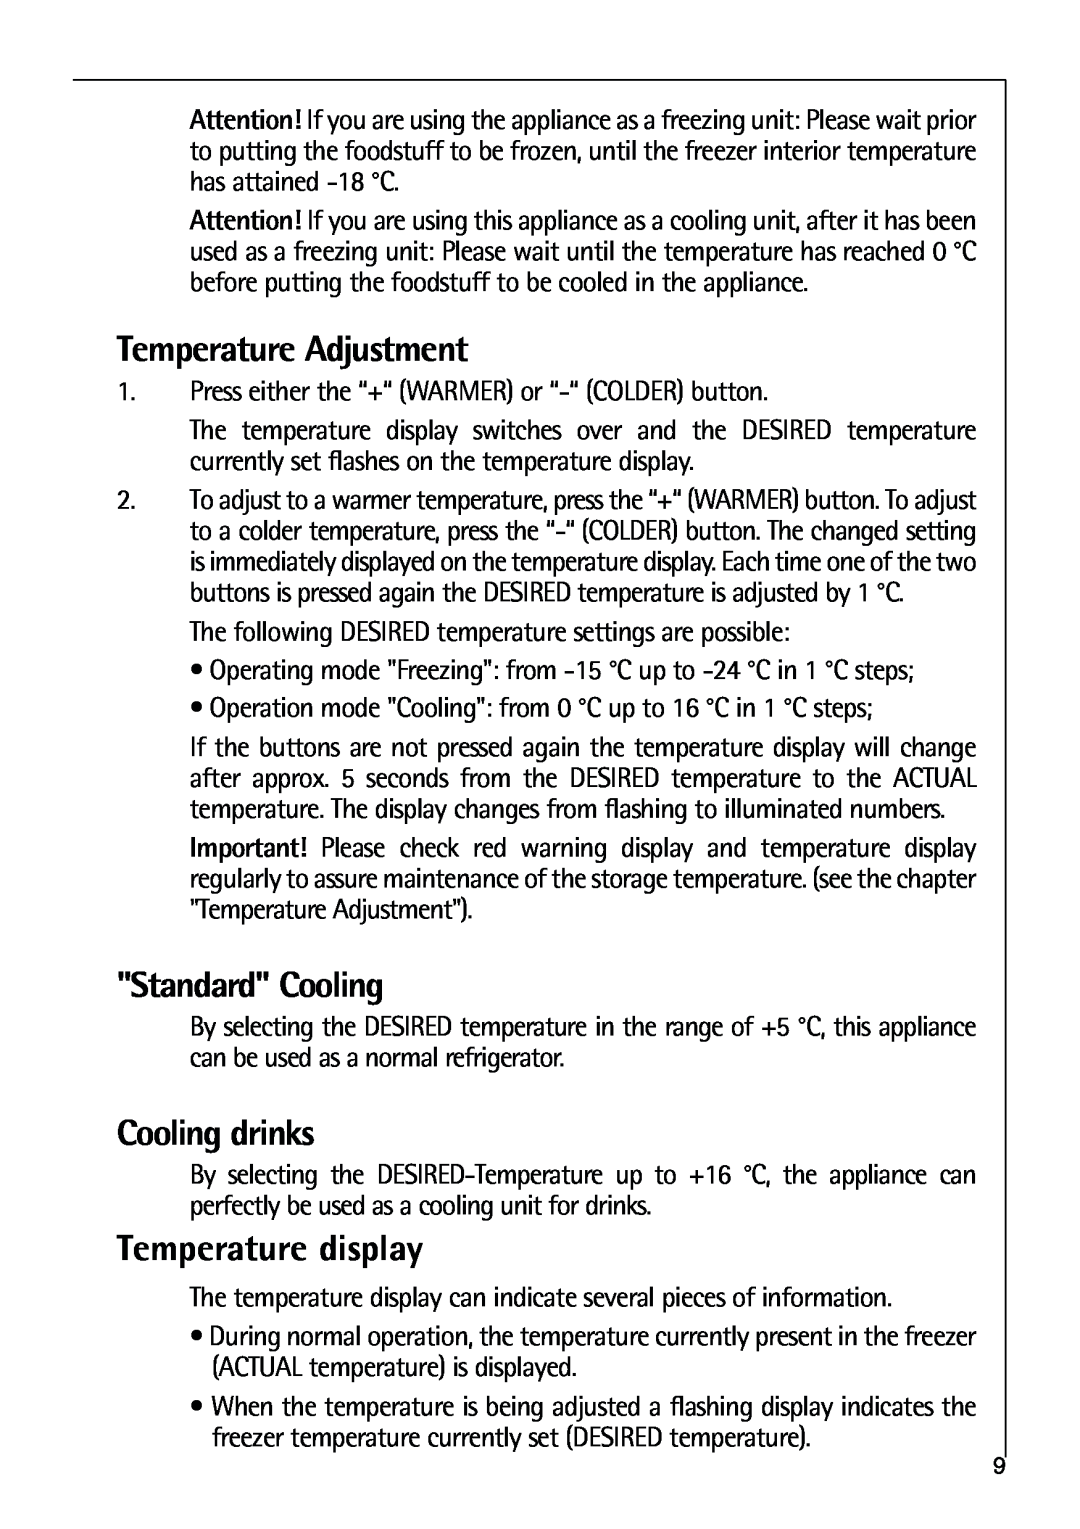 Electrolux 75270 GA user manual Temperature Adjustment, Standard Cooling, Cooling drinks, Temperature display 